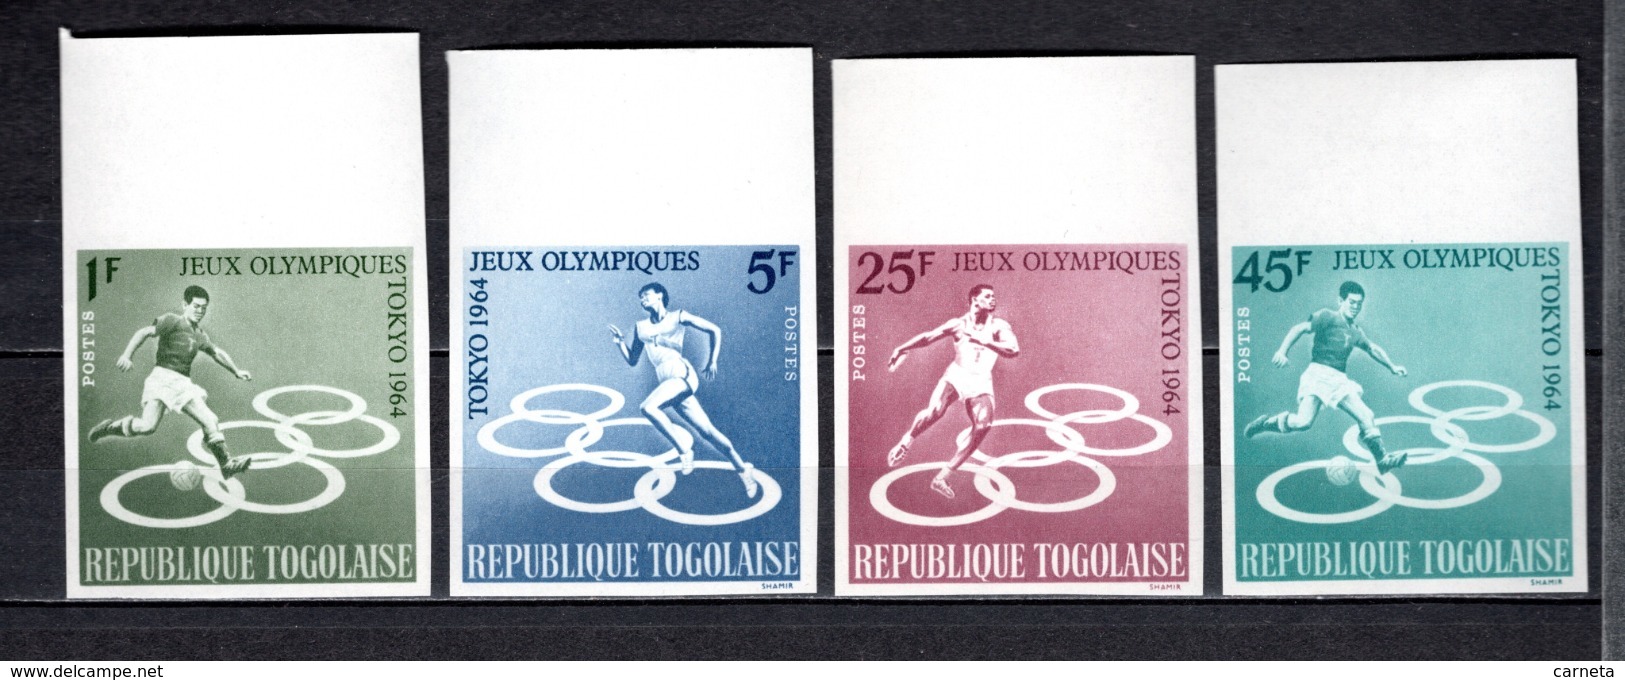 TOGO N° 425 à 428  NON DENTELES  NEUFS SANS CHARNIERE COTE  ? €  JEUX OLYMPIQUES  TOKYO  FOOTBALL - Togo (1960-...)